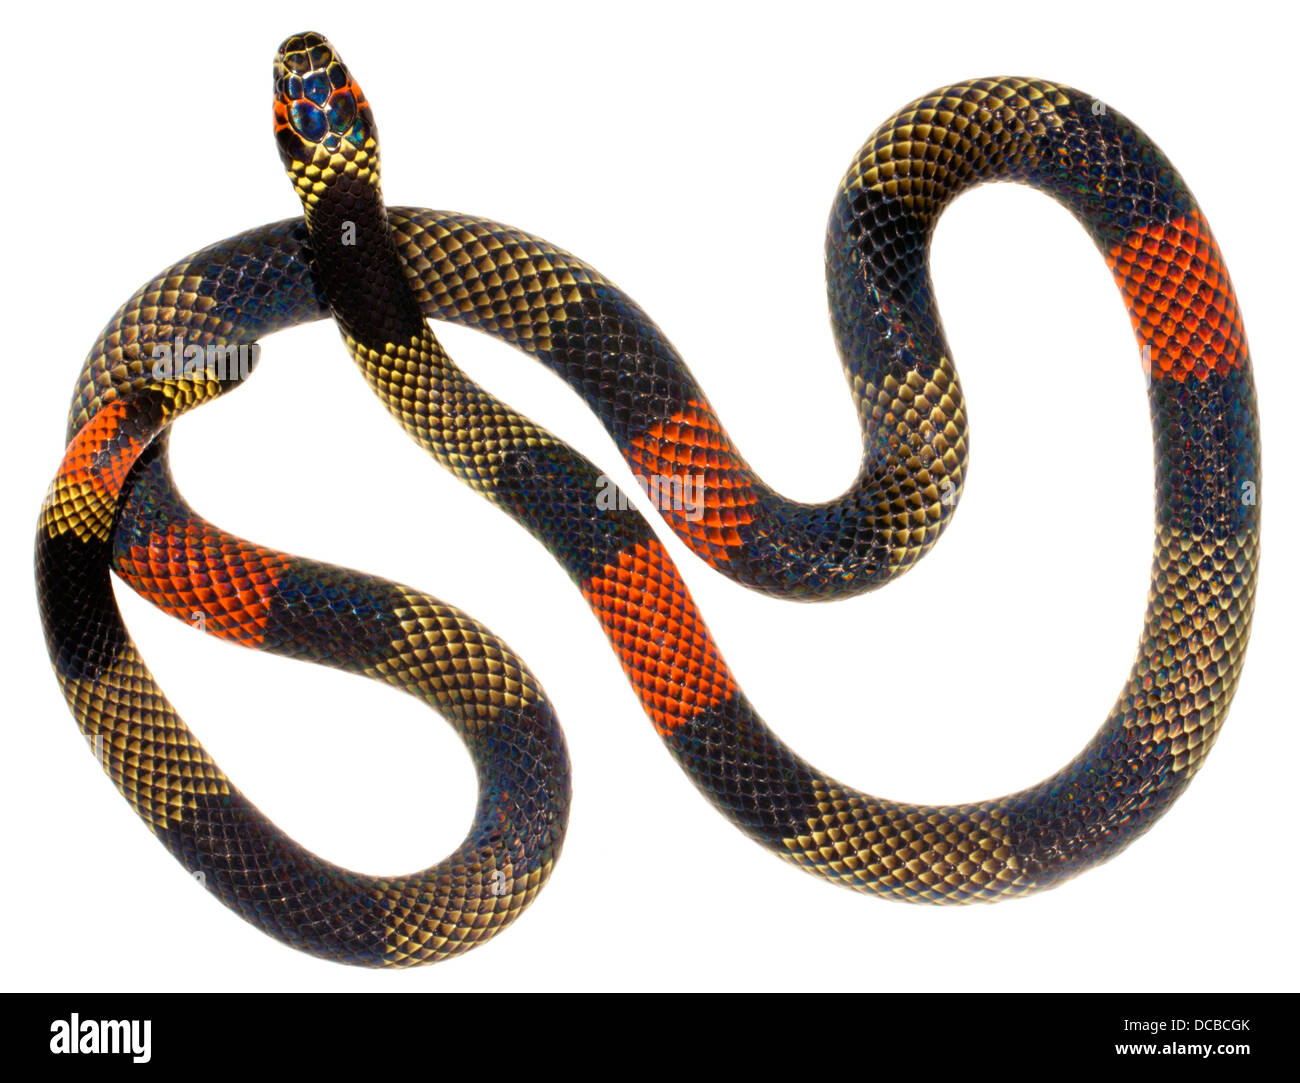 Amazonian Coral Snake (Micrurus spixii obscurus). A venomous snake from the Ecuadorian Amazon. Stock Photo